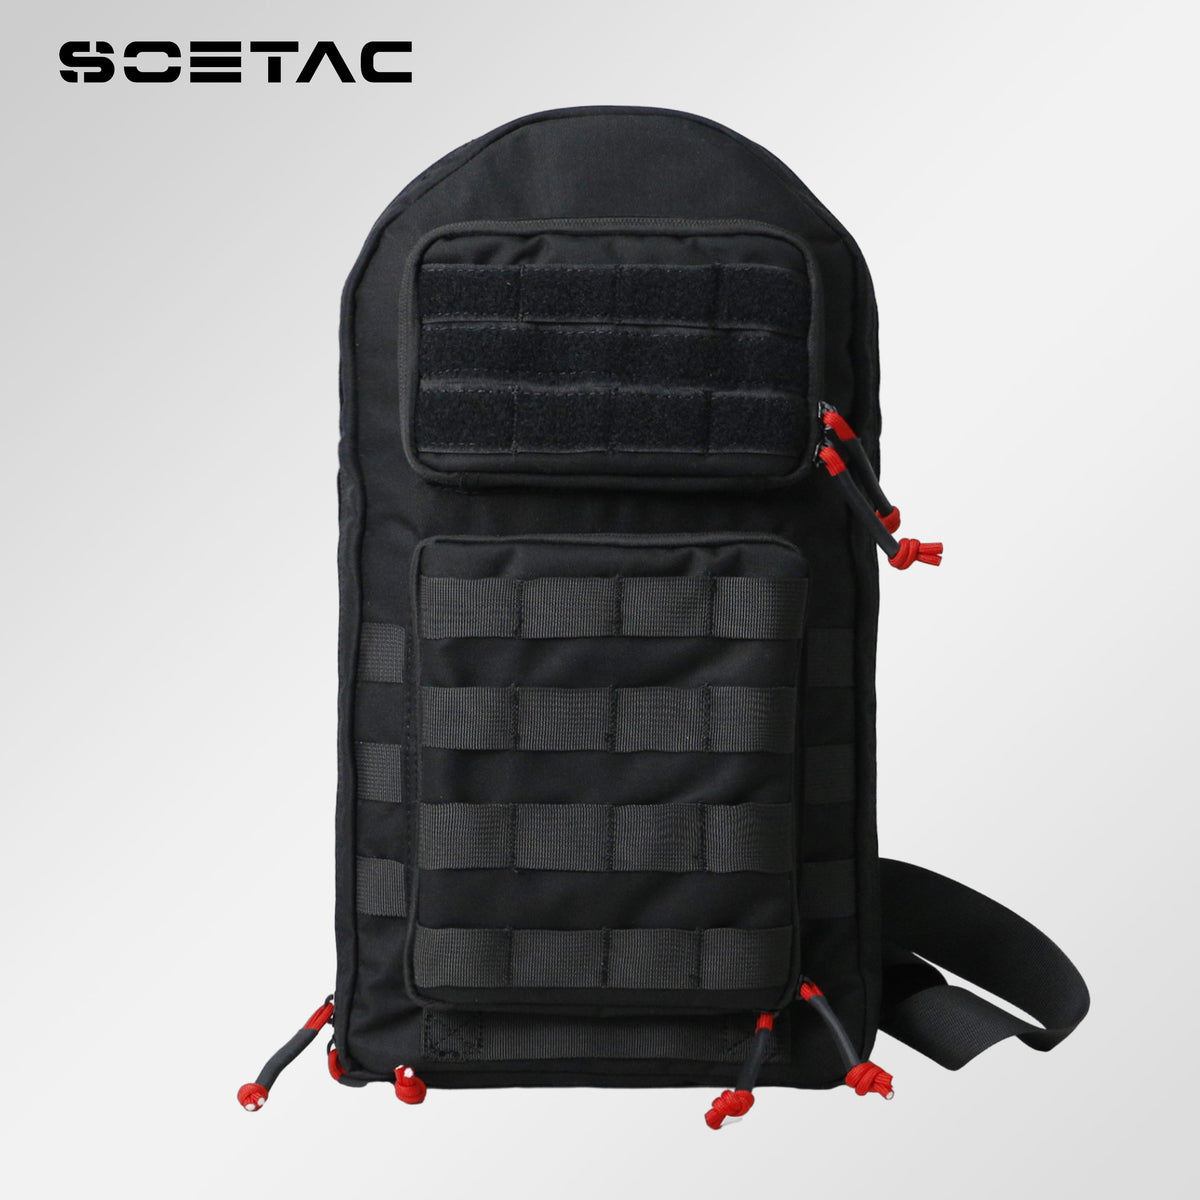 Soetac Arm Shield Bag